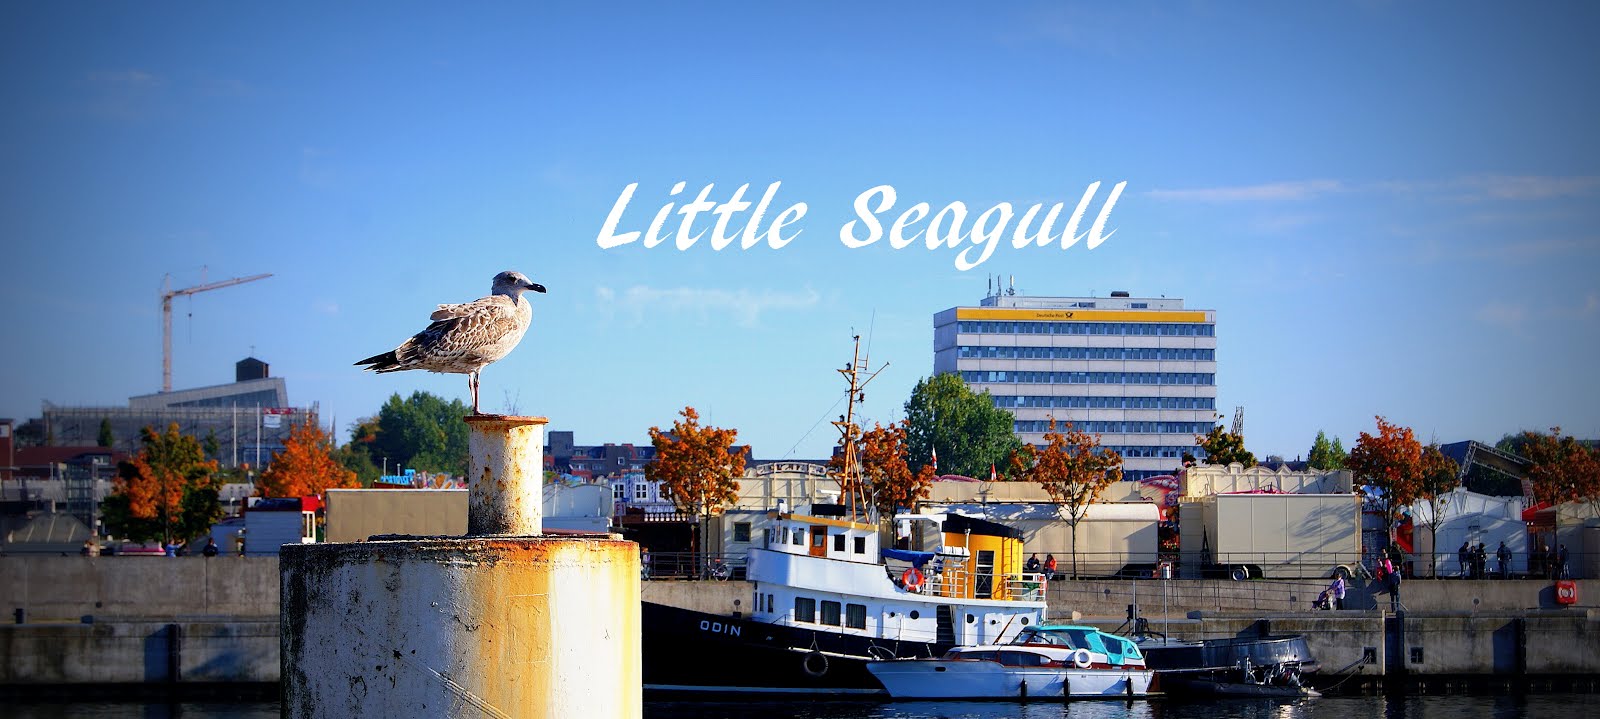 little seagull